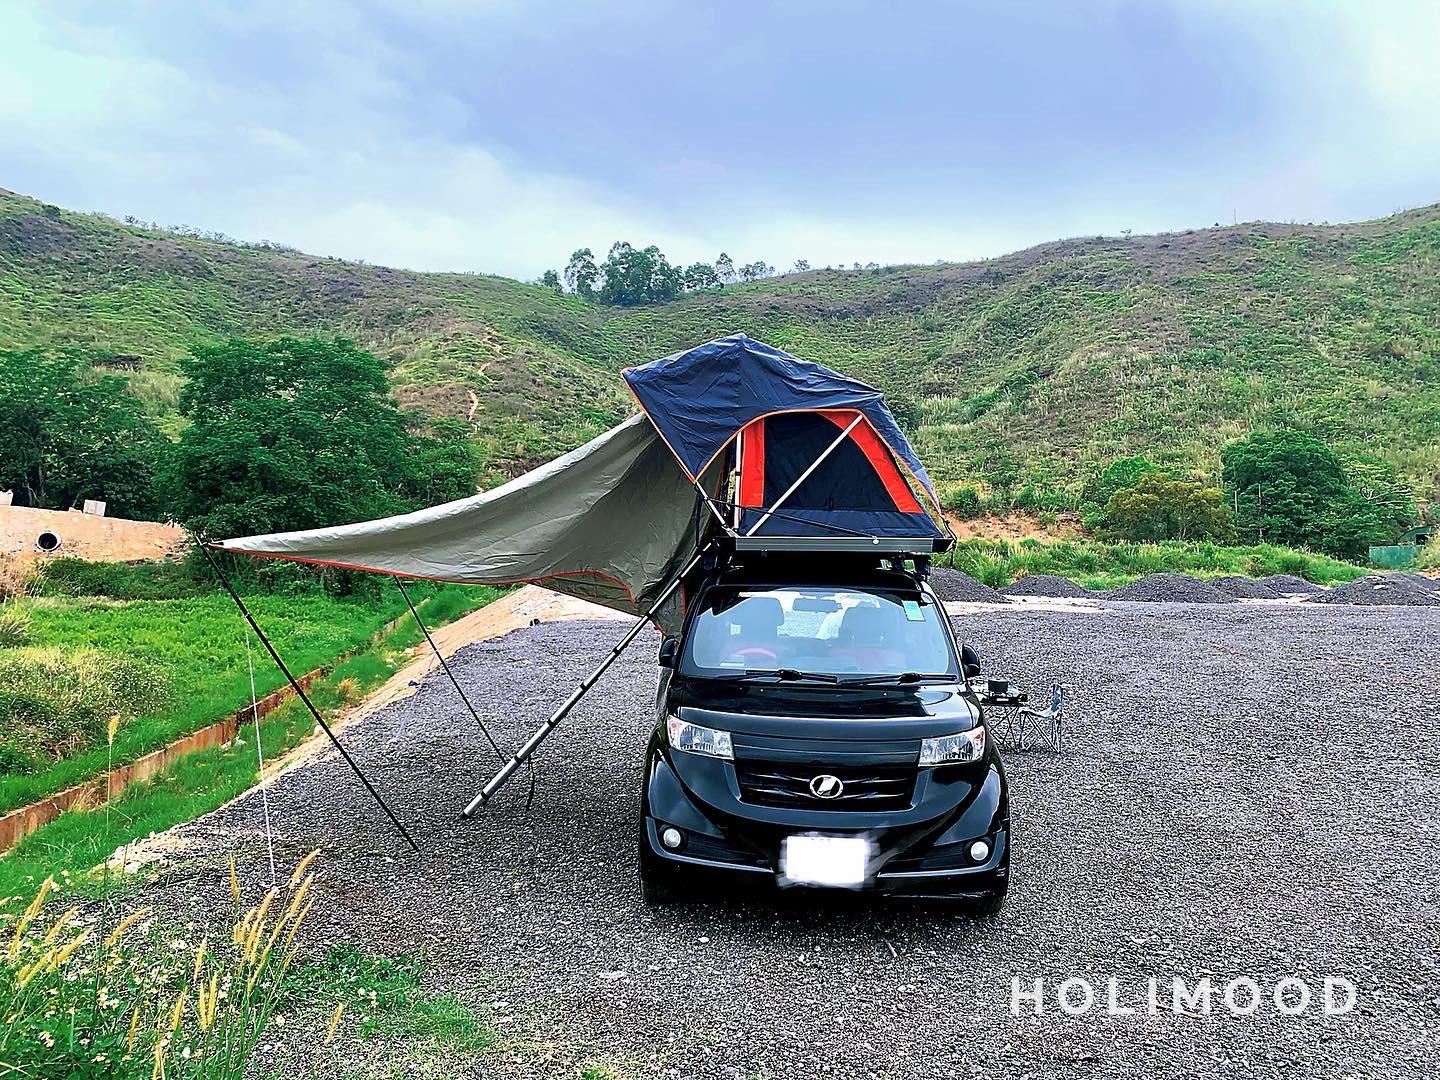 Top Tent Car Camping 【汽車露營】Toyota BB 車頂營體驗 (可攜帶寵物/租借營具) 5